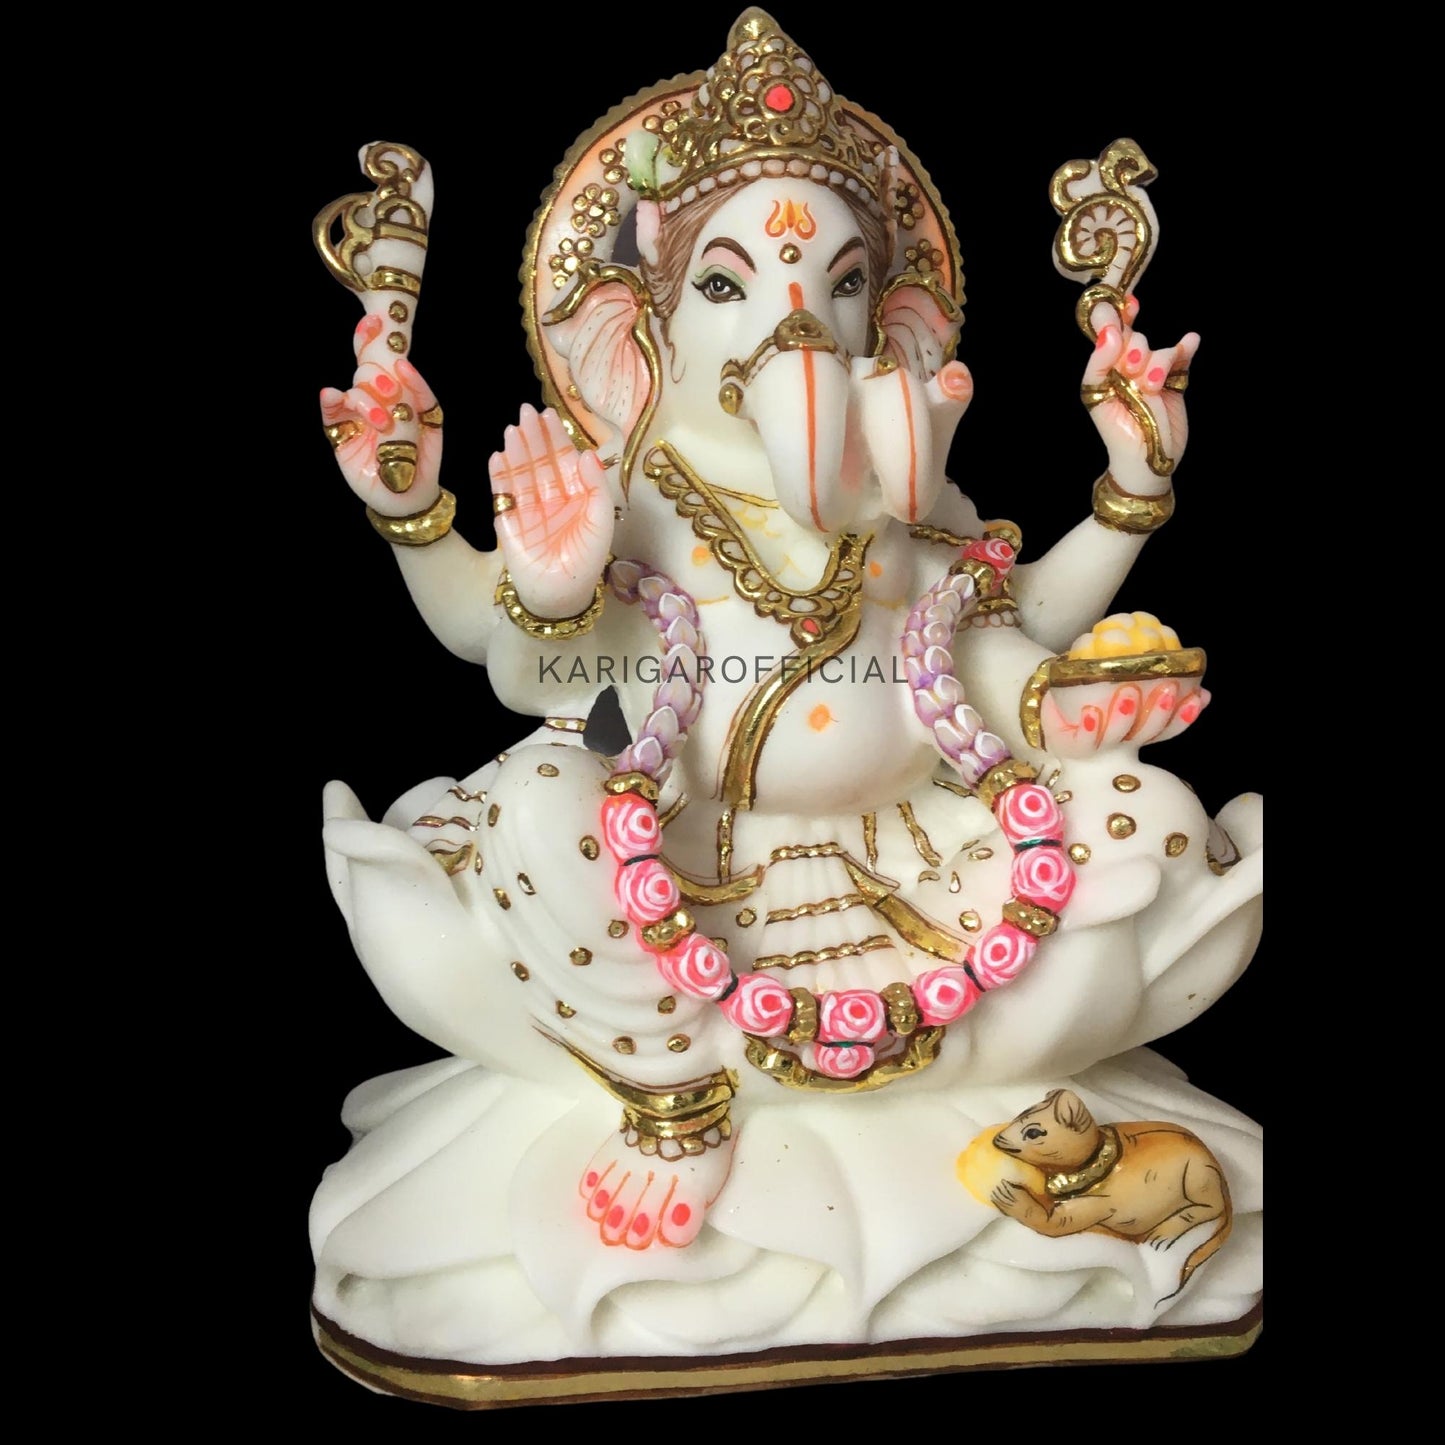 Ganesha Murti Statue, Large 12 inches White Marble Ganpati Figurine, Gold leaf Work Vinayak Deity Ganesha Statue Marble, Big White Elephant Head God Idol Home Decor Gift Sculpture Home First Ganesha